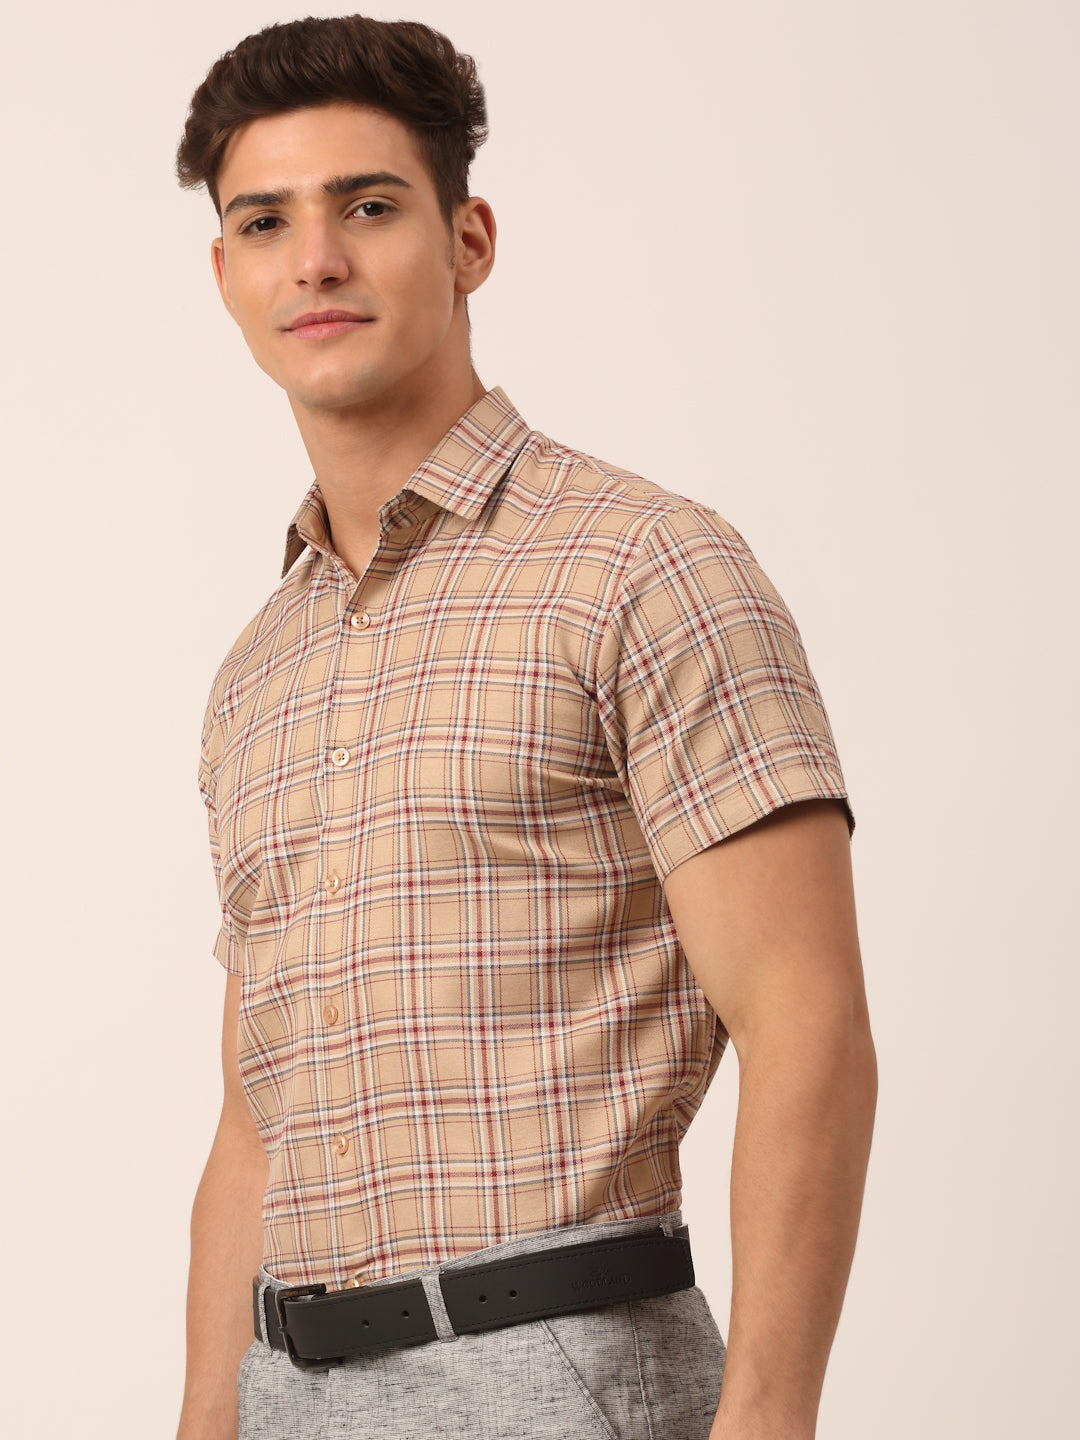 Men's Cotton Checked Half Sleeve Formal Shirts ( SF 815Brown ) - Jainish